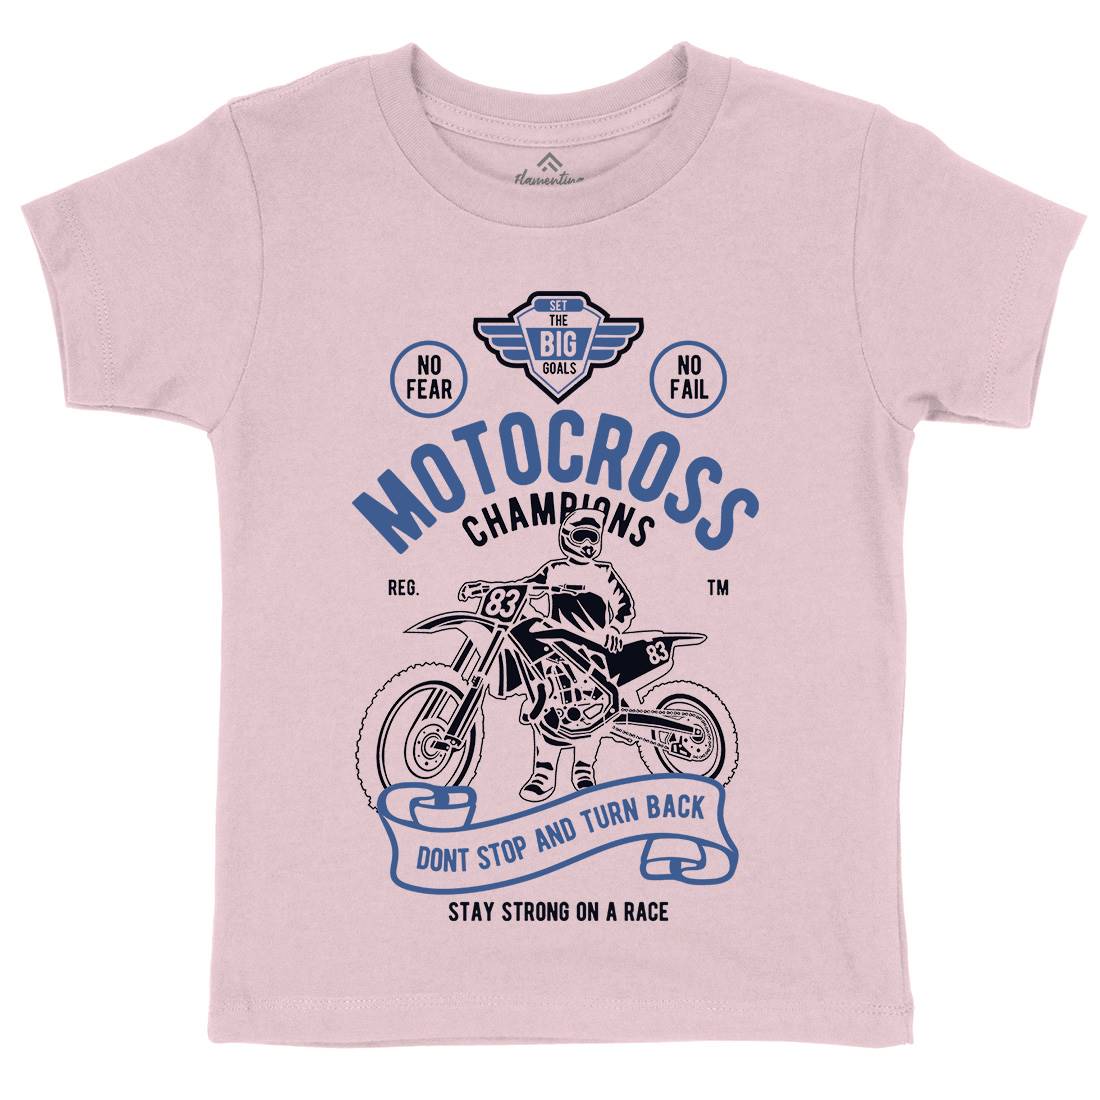 Motocross Champions Kids Crew Neck T-Shirt Motorcycles B230